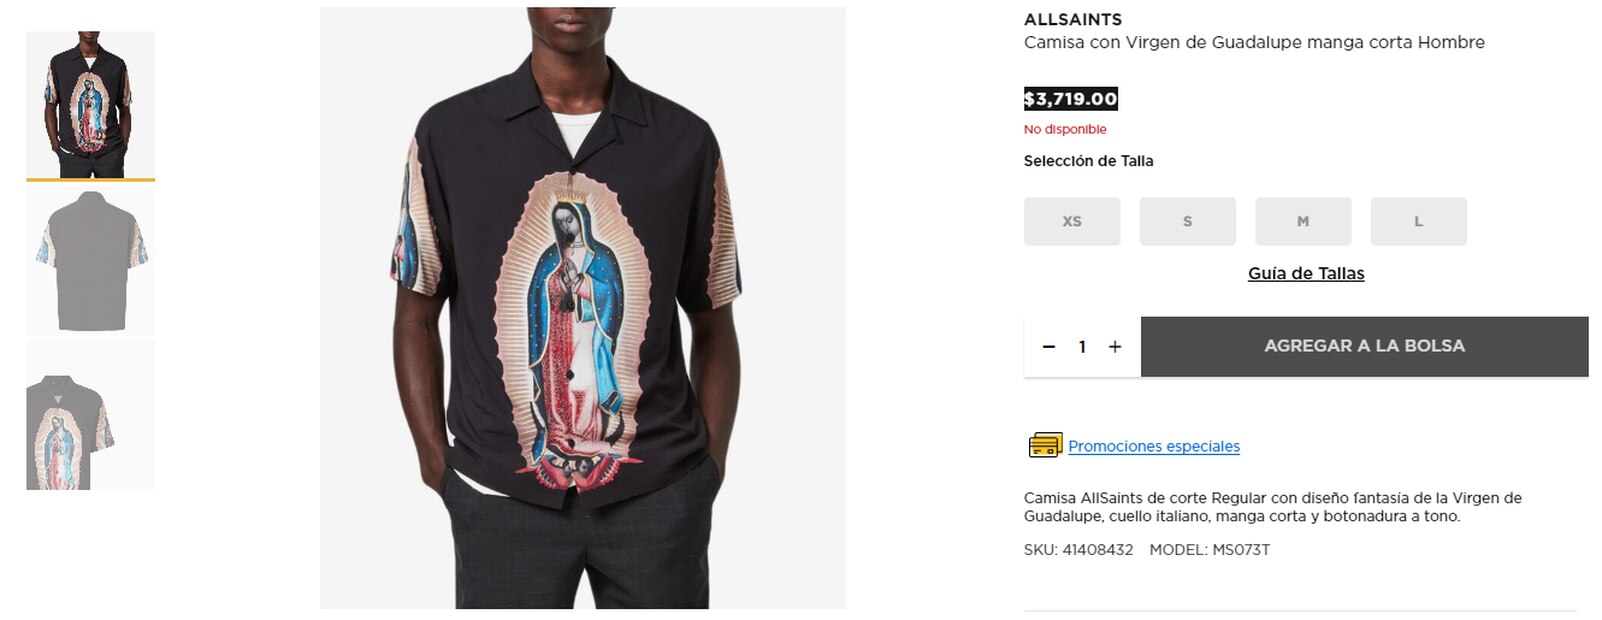 Camisa de Mohamed cuesta casi cuatro mil pesos - Foto: Especial